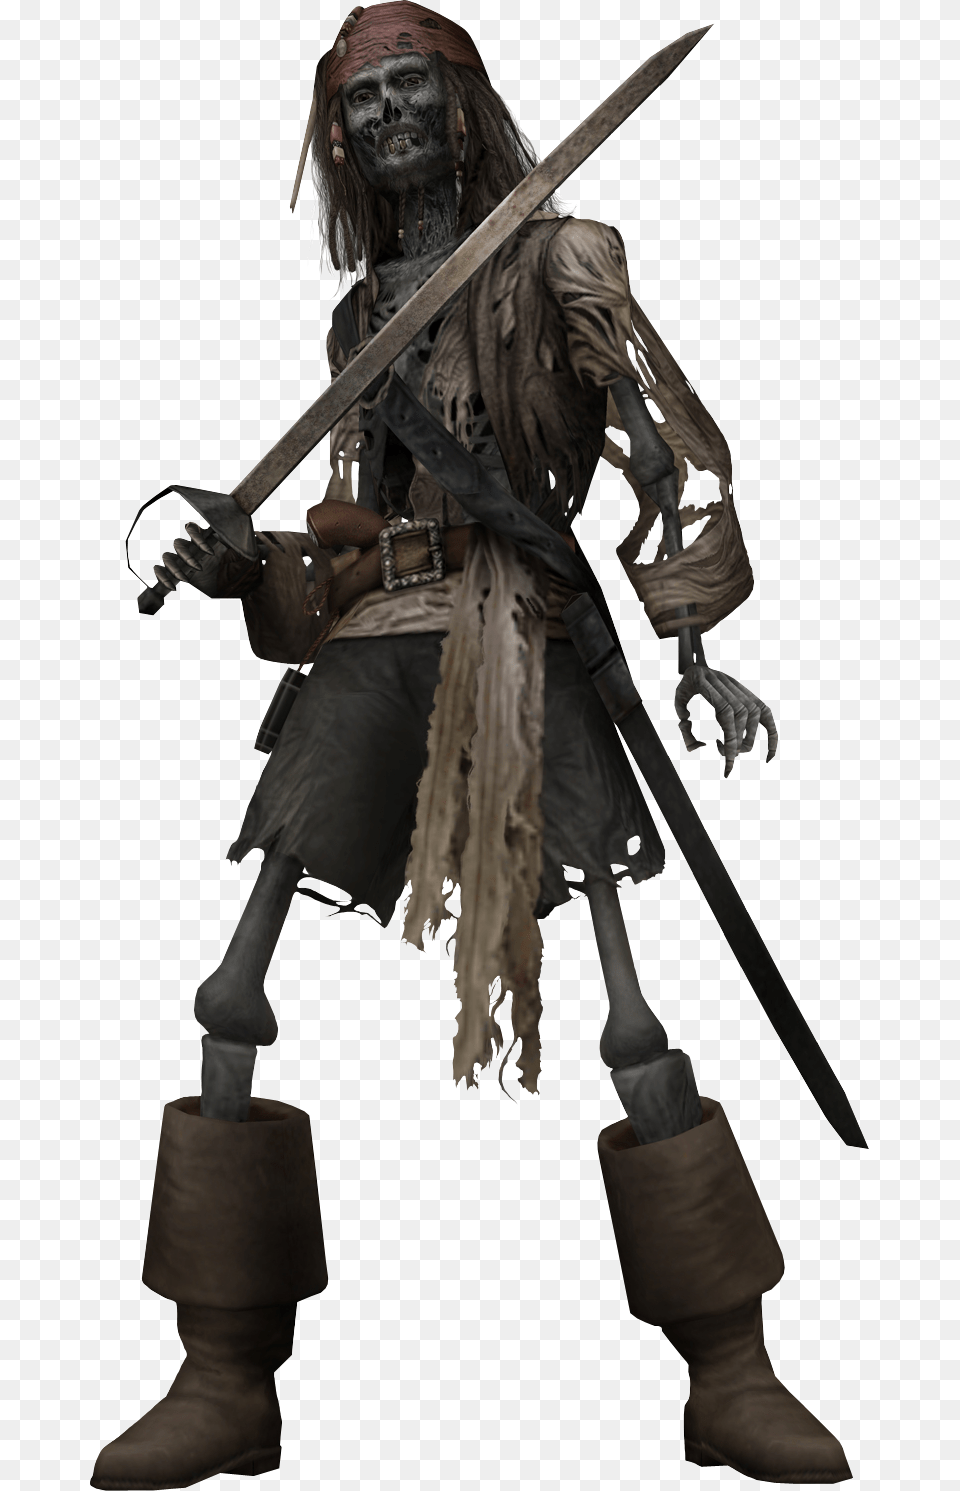 Jack Sparrow High Quality Captain Jack Sparrow Zombie, Adult, Male, Man, Person Png Image